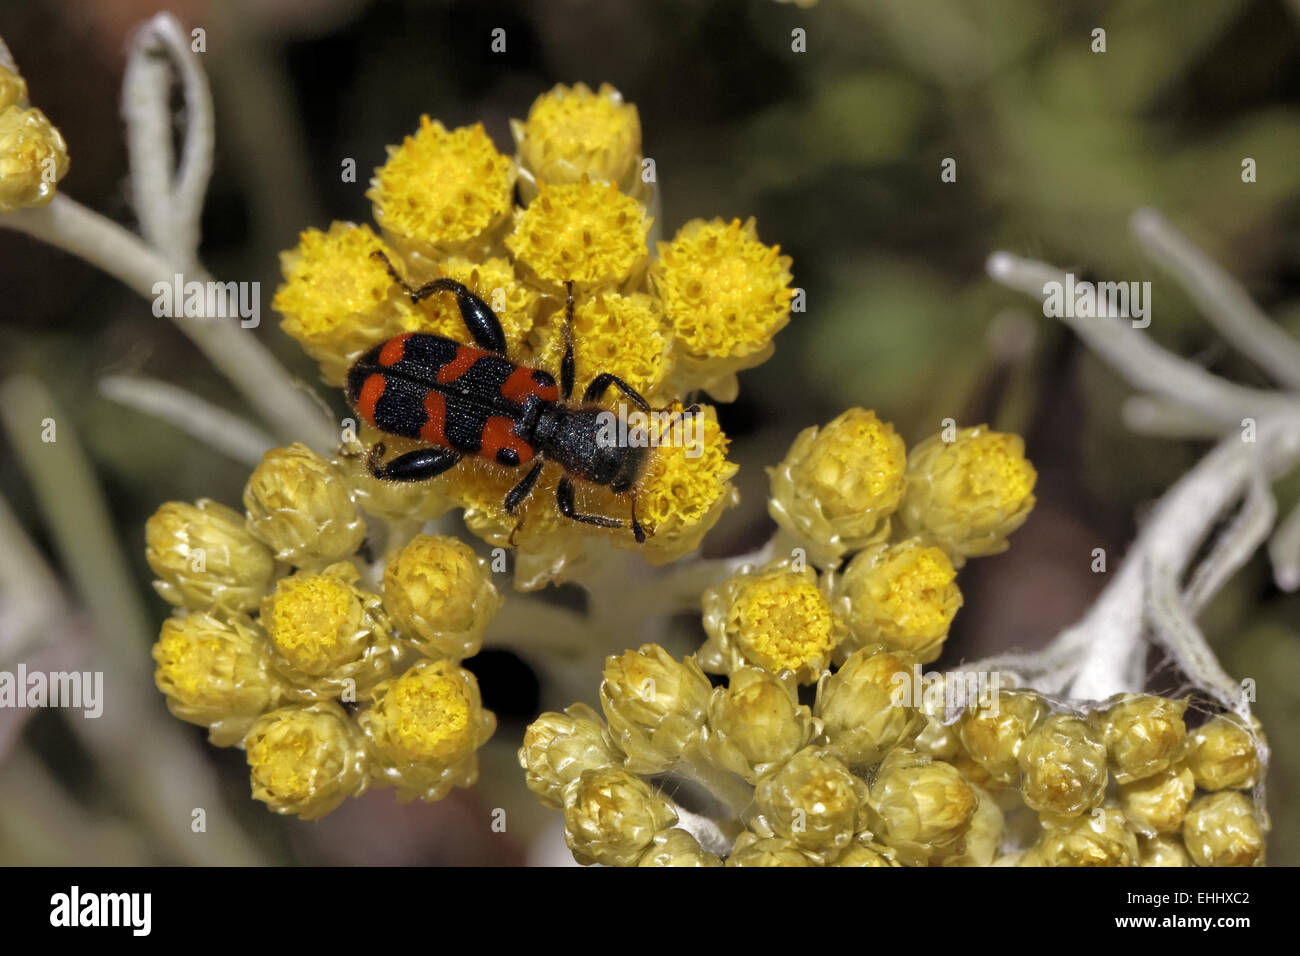 richodes apiarius, bee beetle on Helichrysum Stock Photo